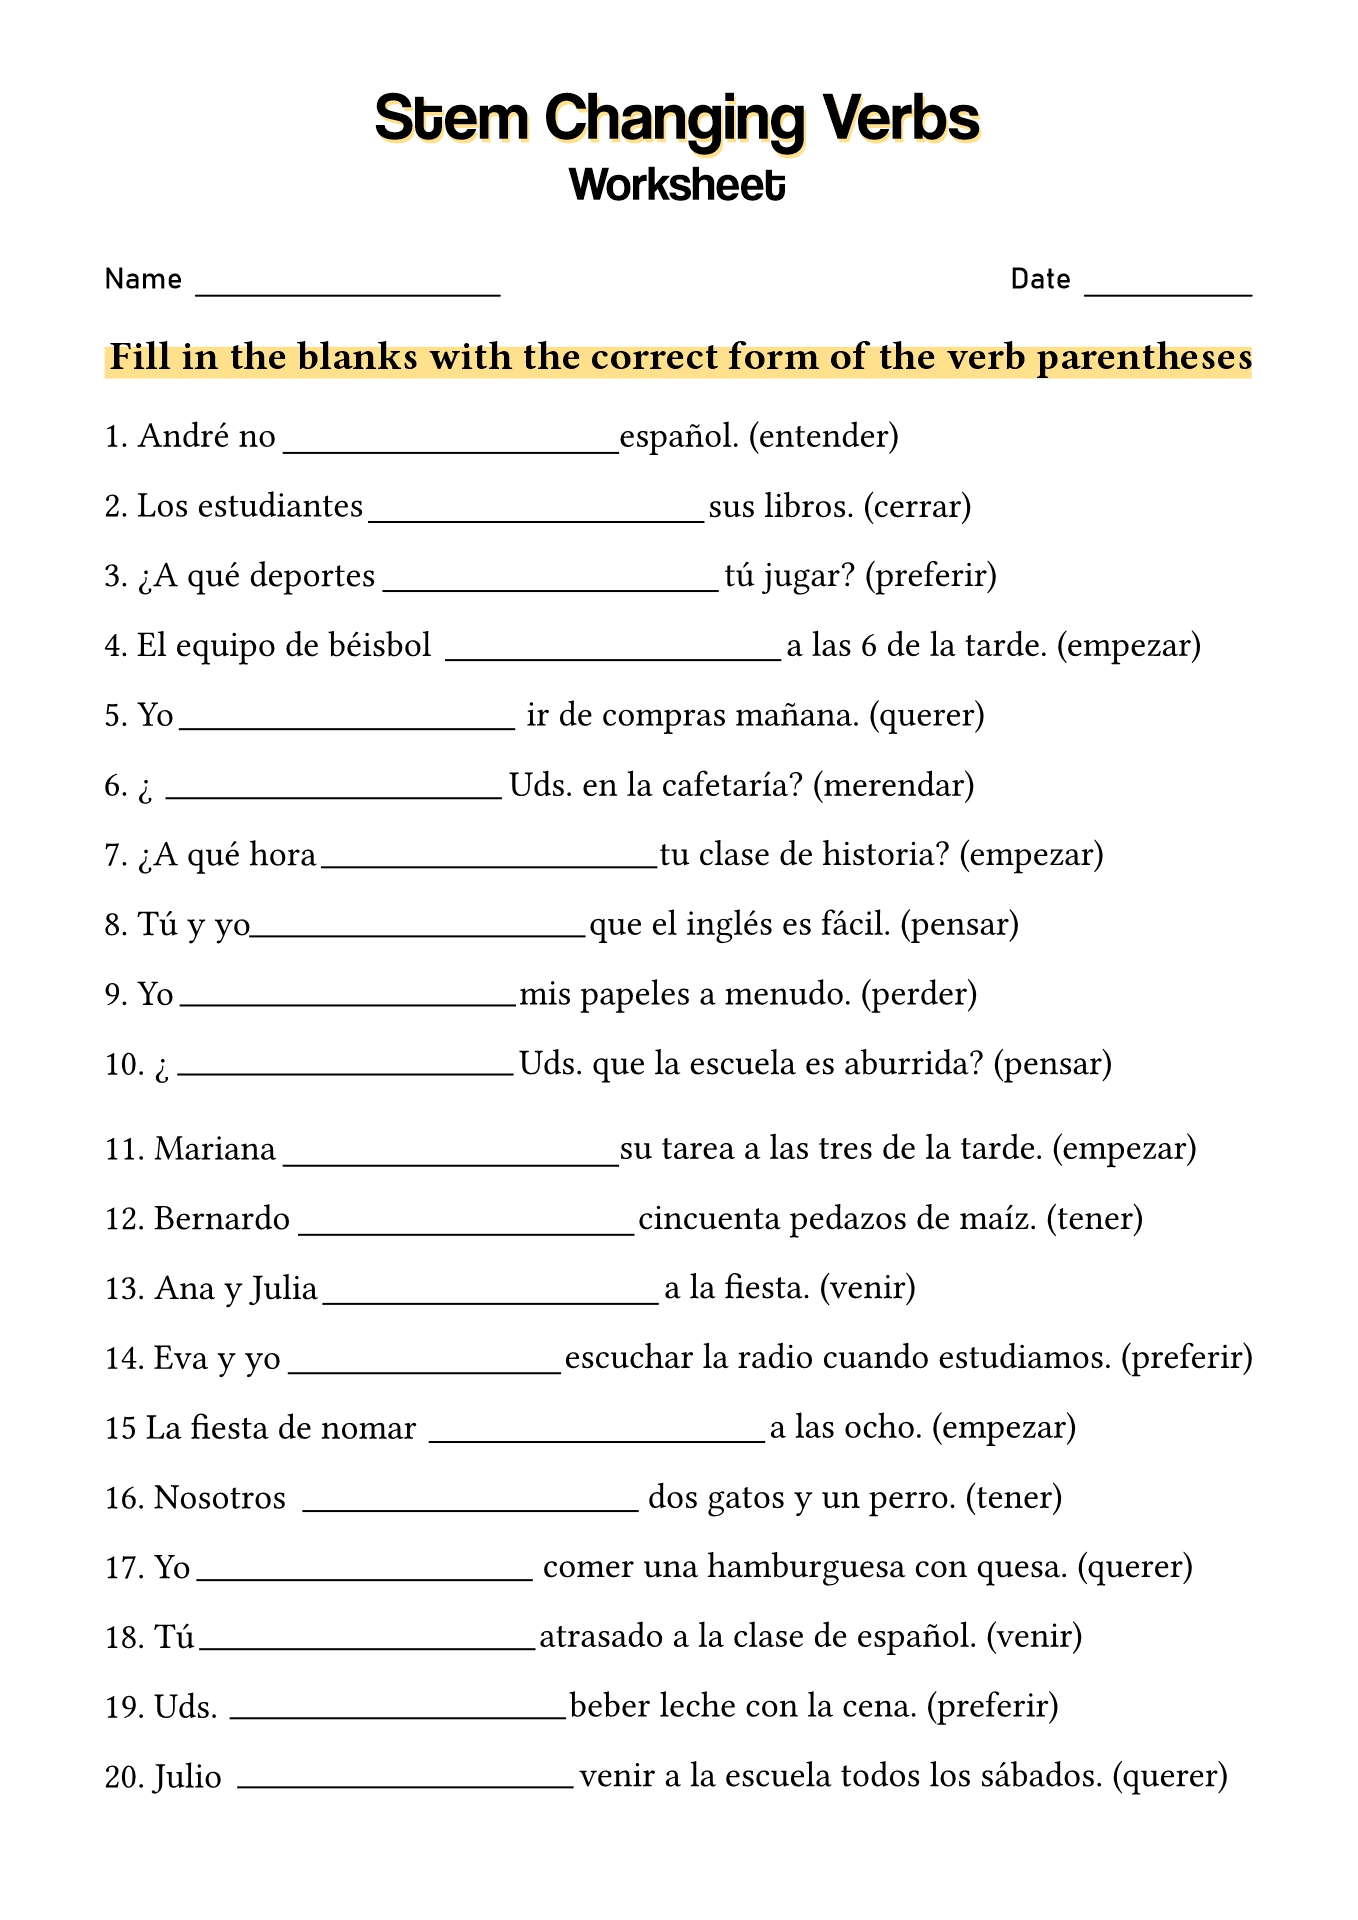 Present Tense Stem Changing Verbs Worksheets